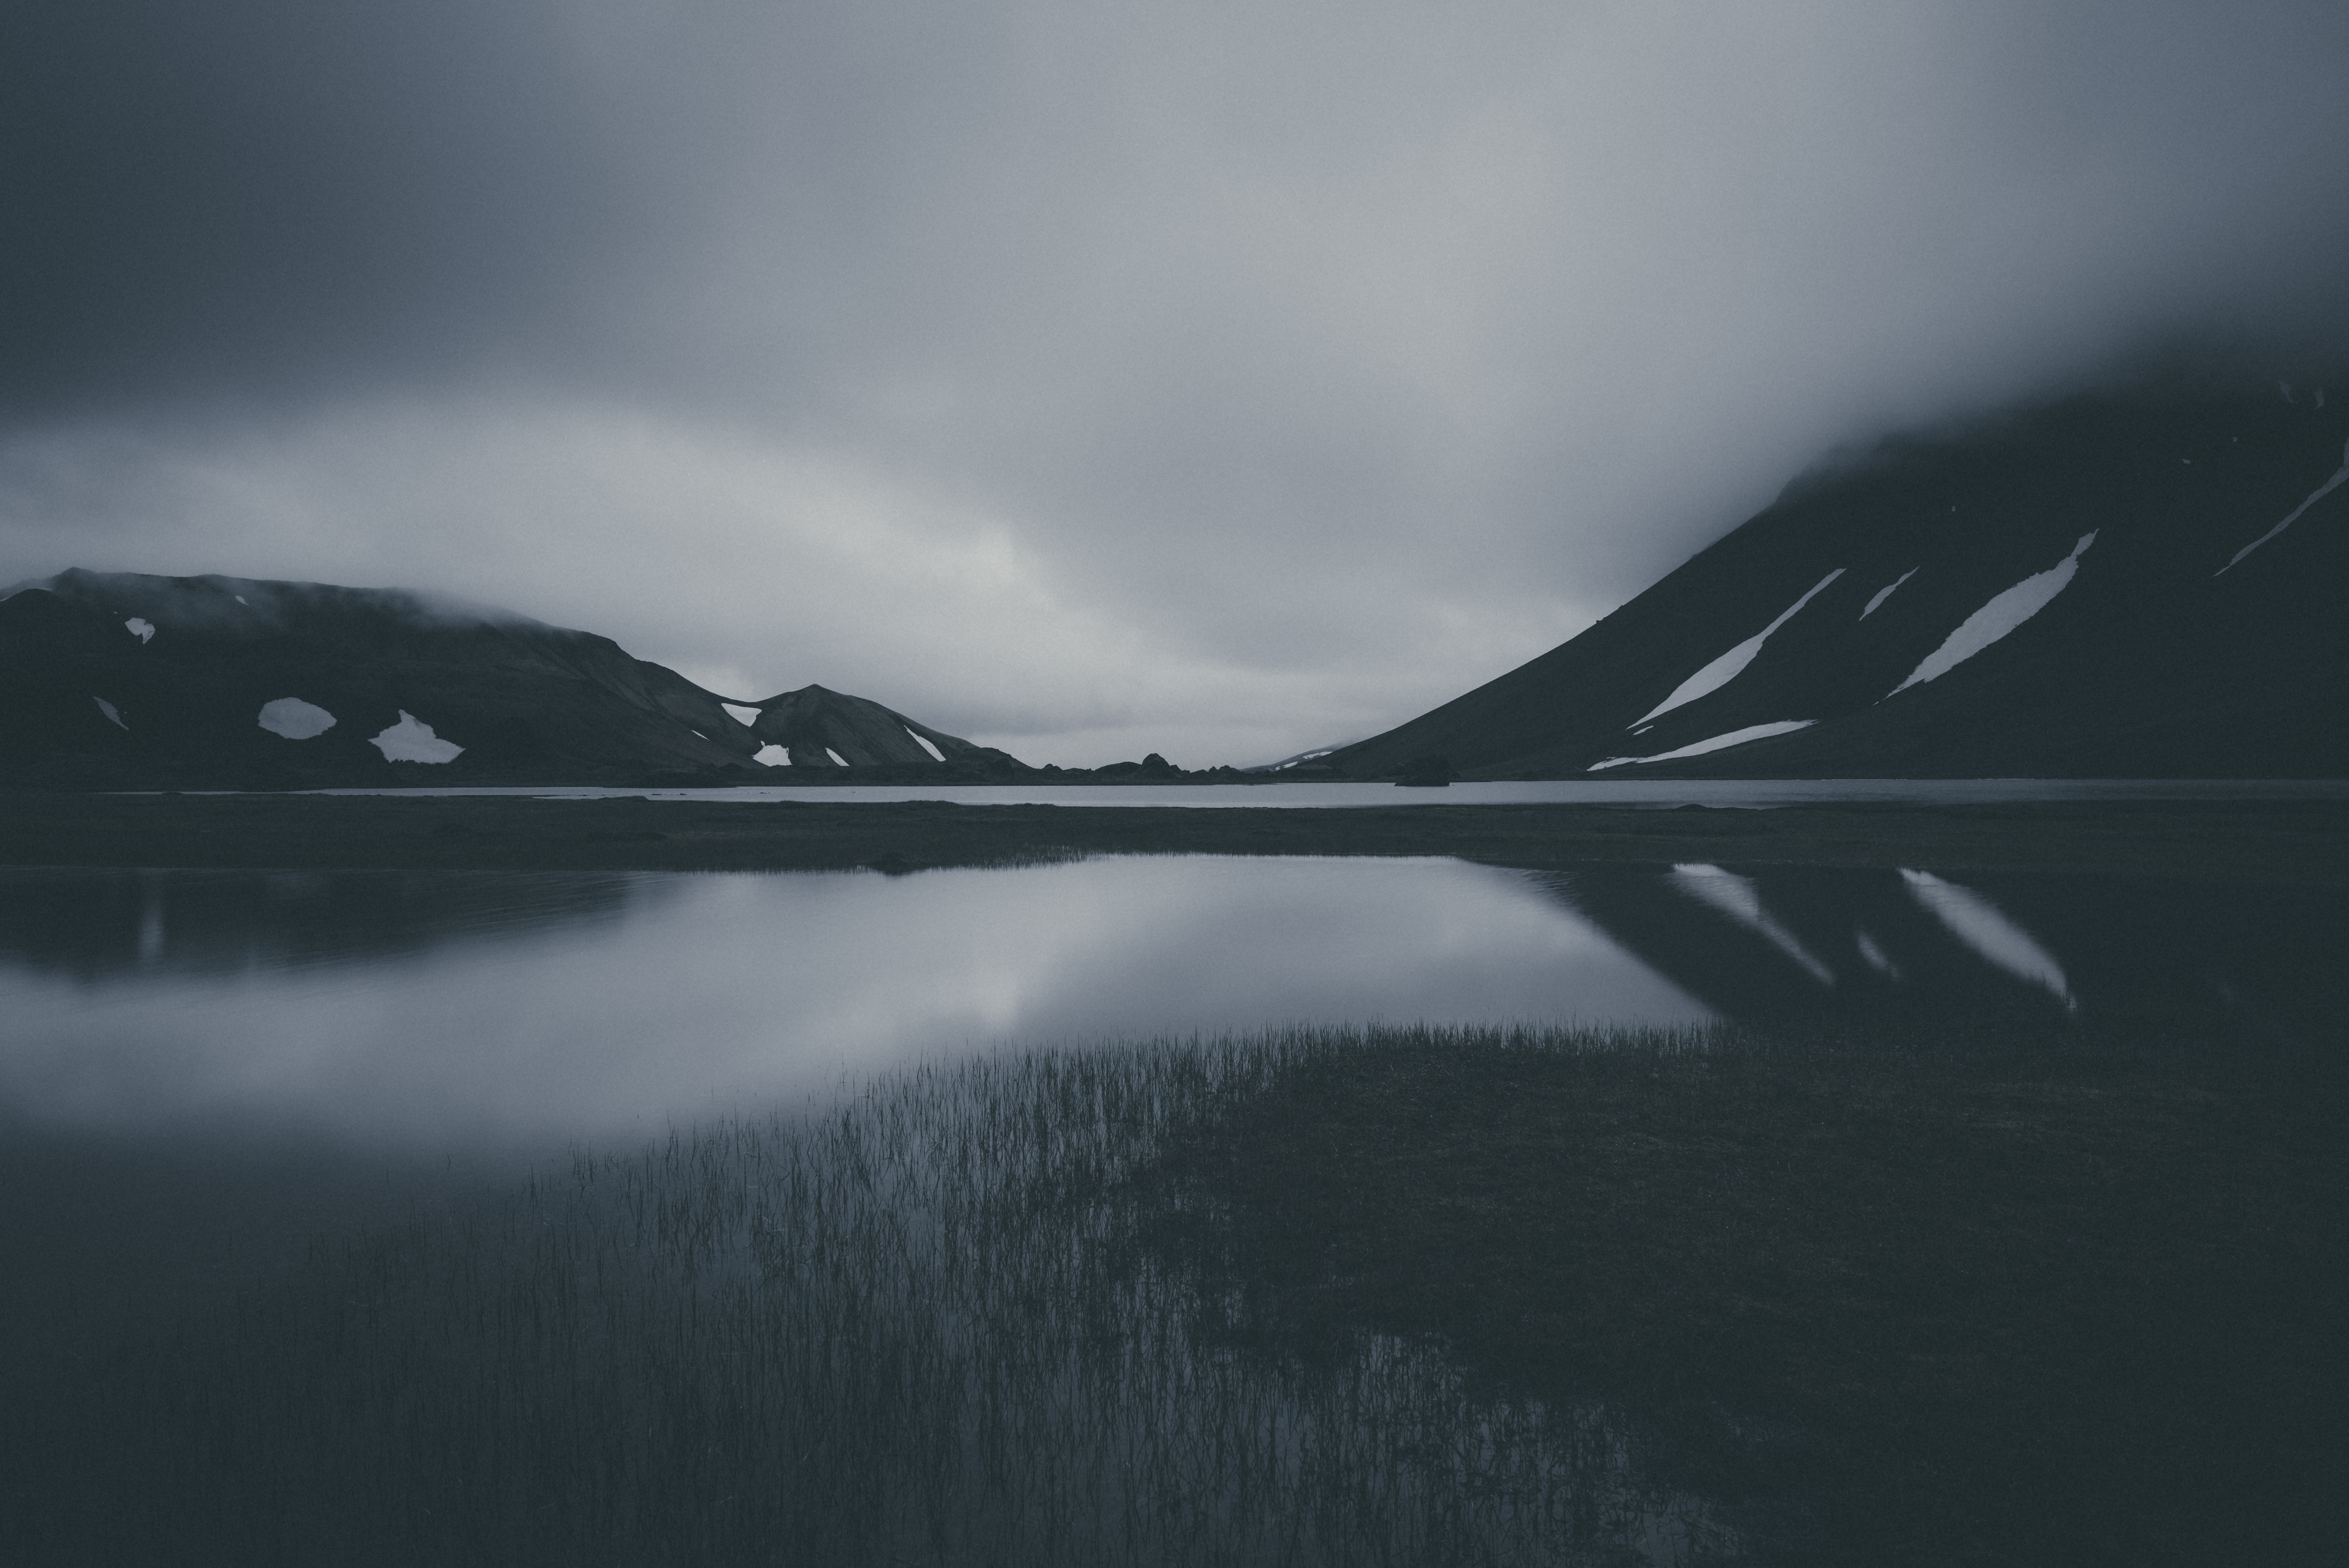 bw, gloomy, dark, mountains, lake, chb, gloomily images